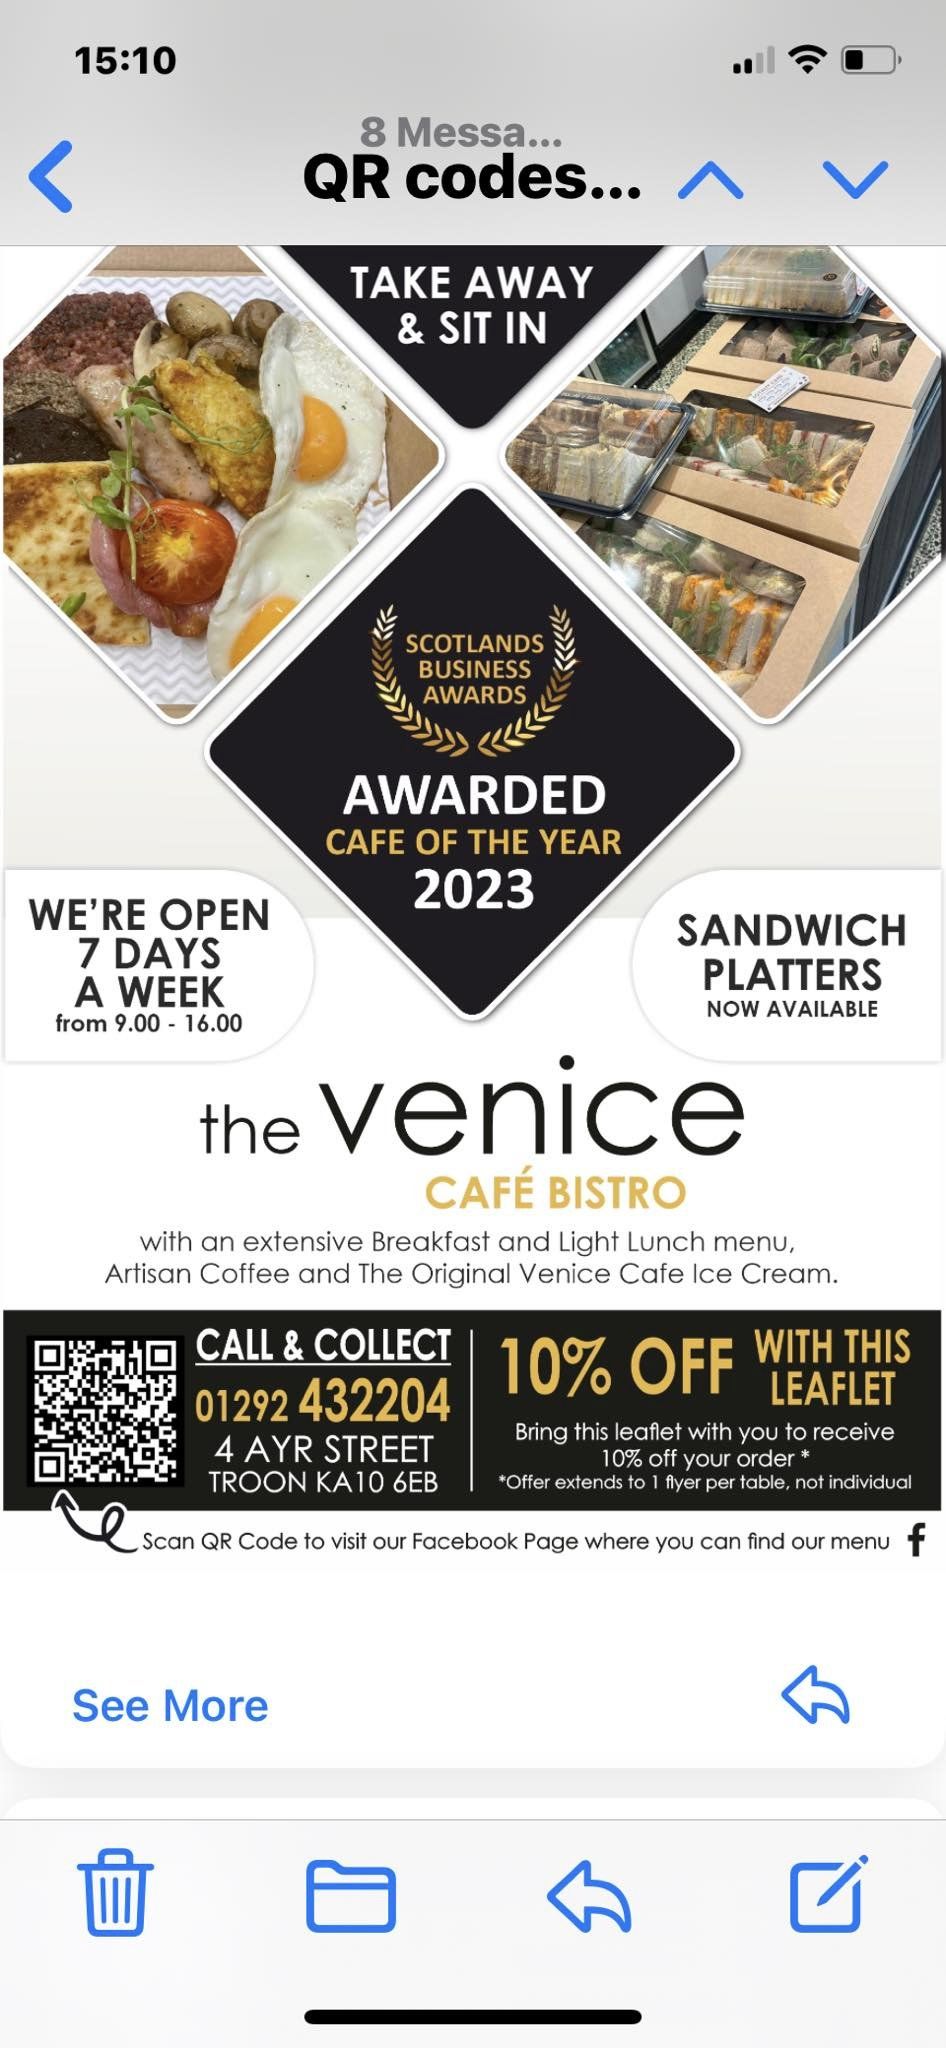 The Venice Cafe